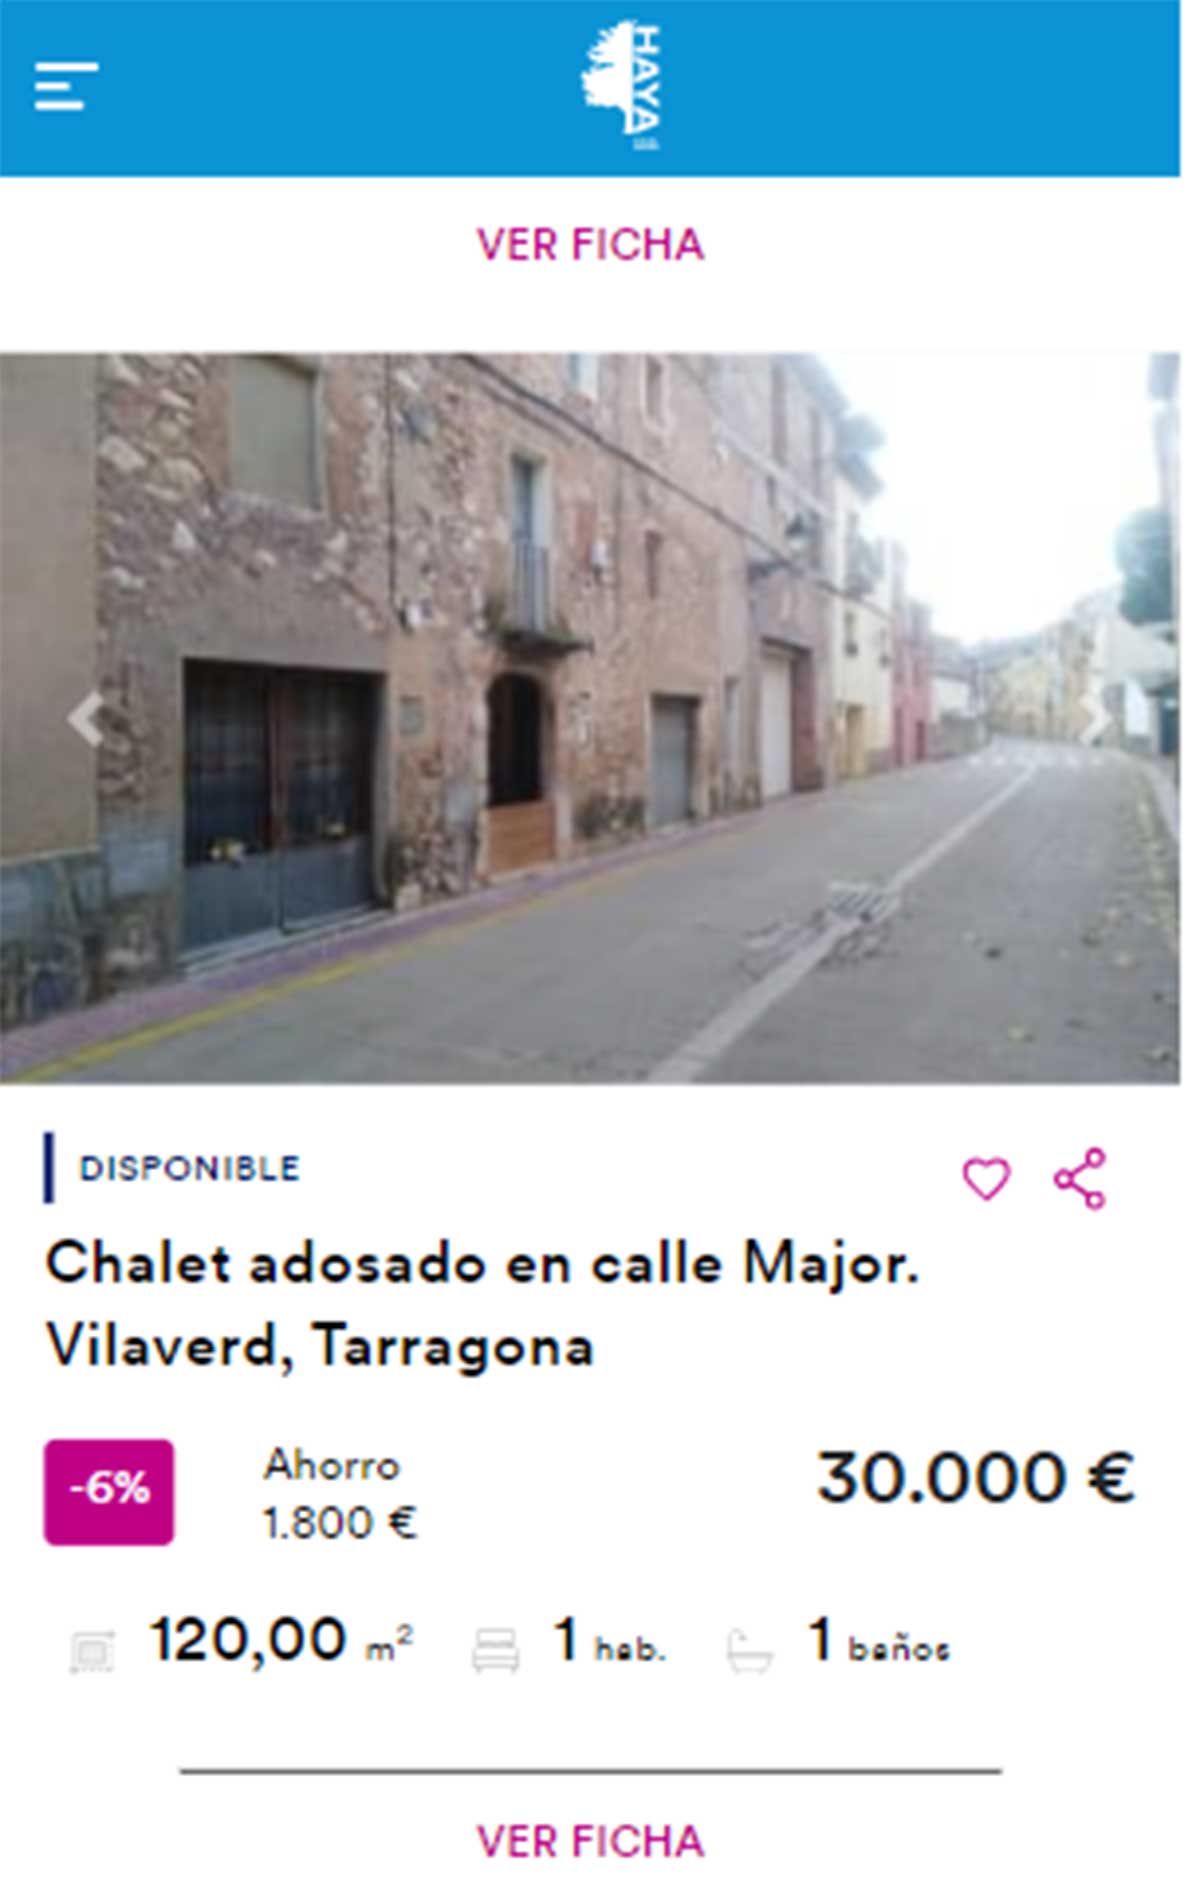 Chalet adosado por 30.000 euros